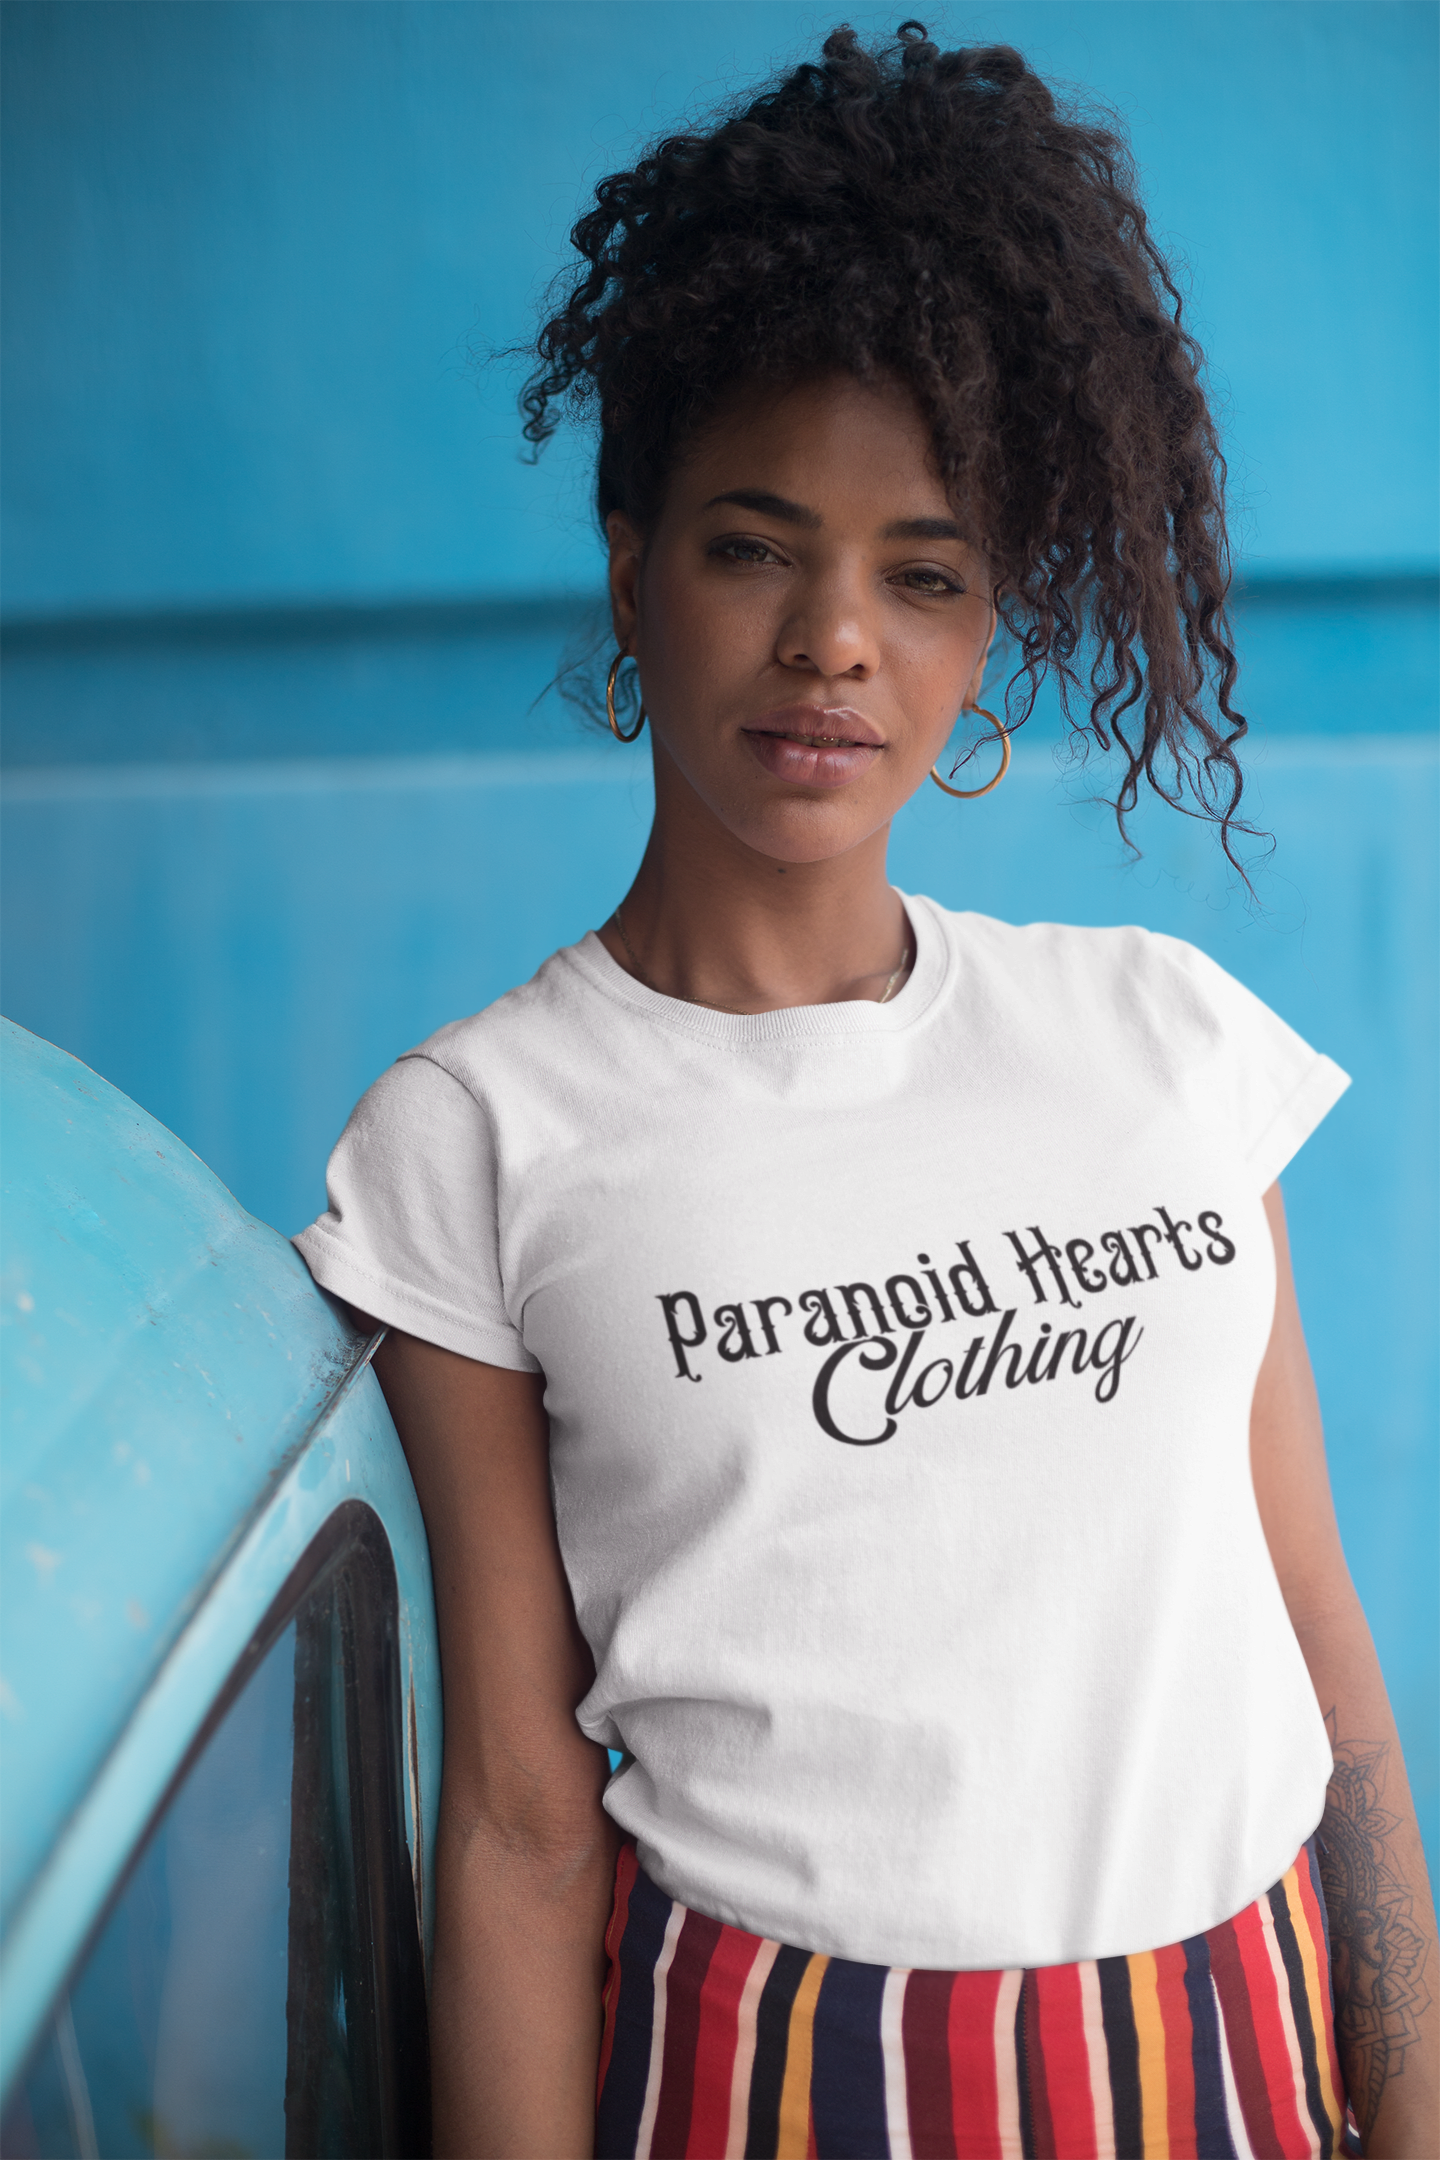 Control Freak - T-shirts - Paranoid Hearts Clothing